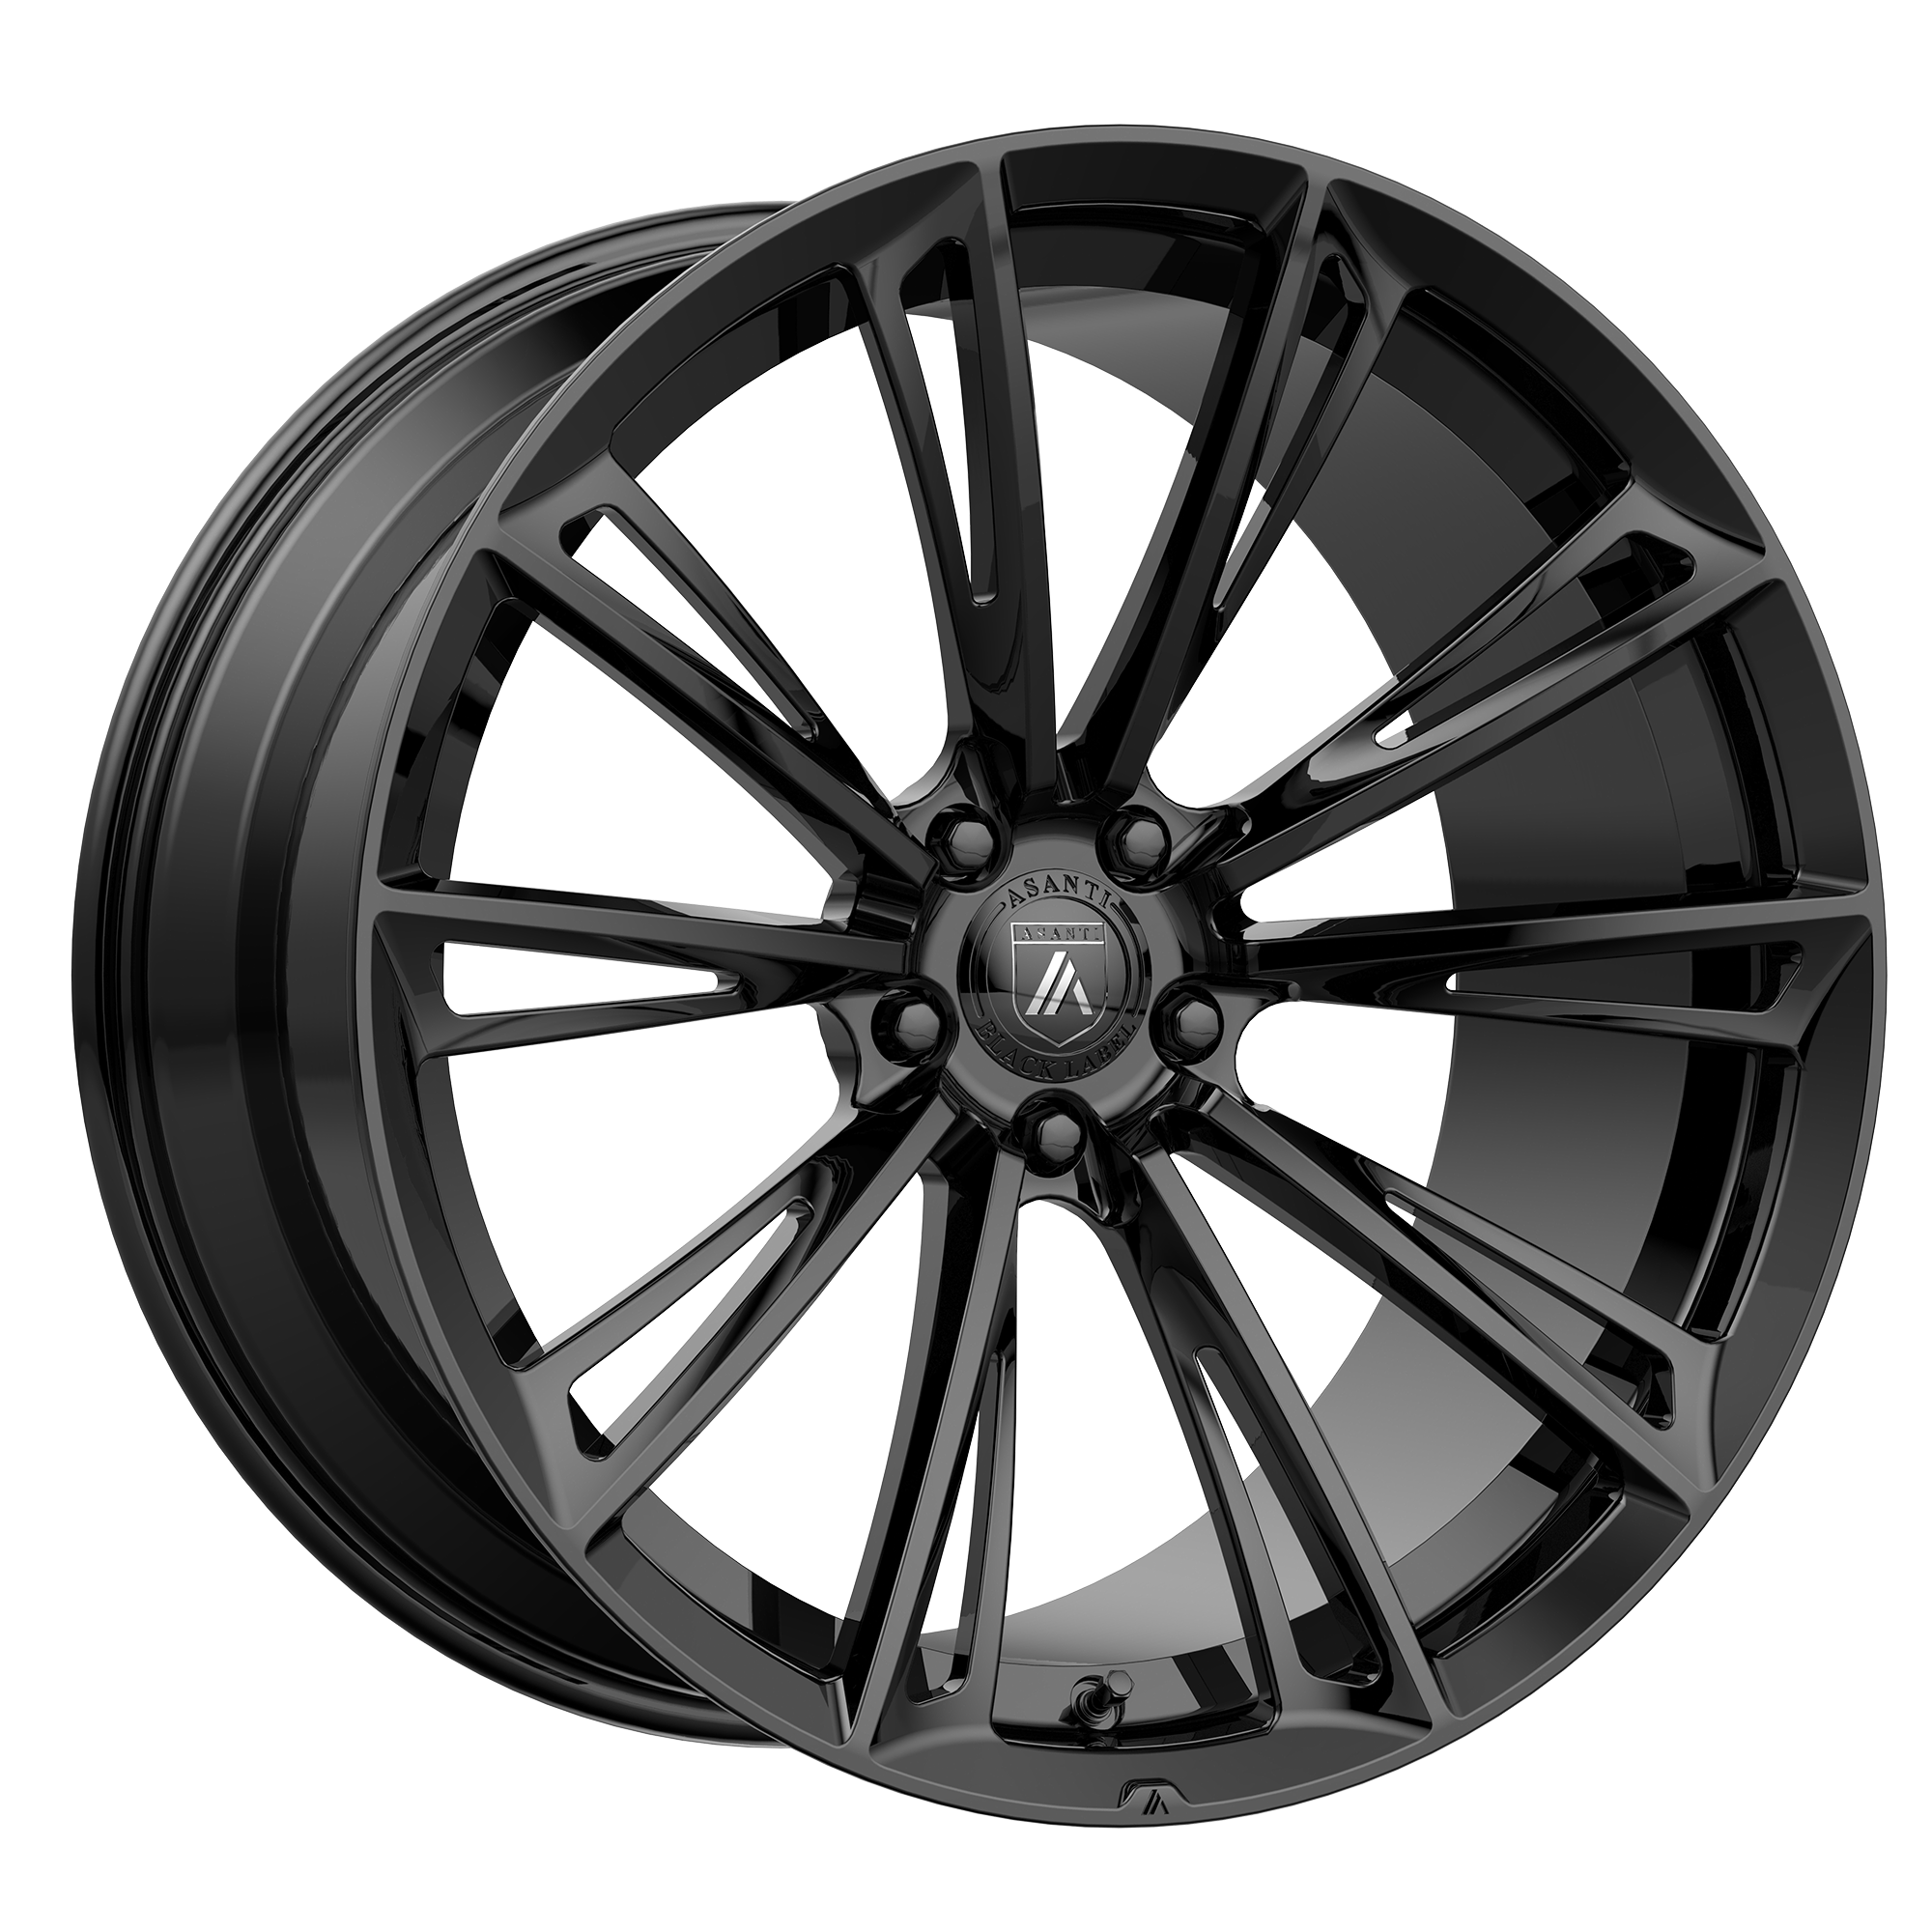 CORONA 22x9 5x115.00 GLOSS BLACK (15 mm) - Tires and Engine Performance